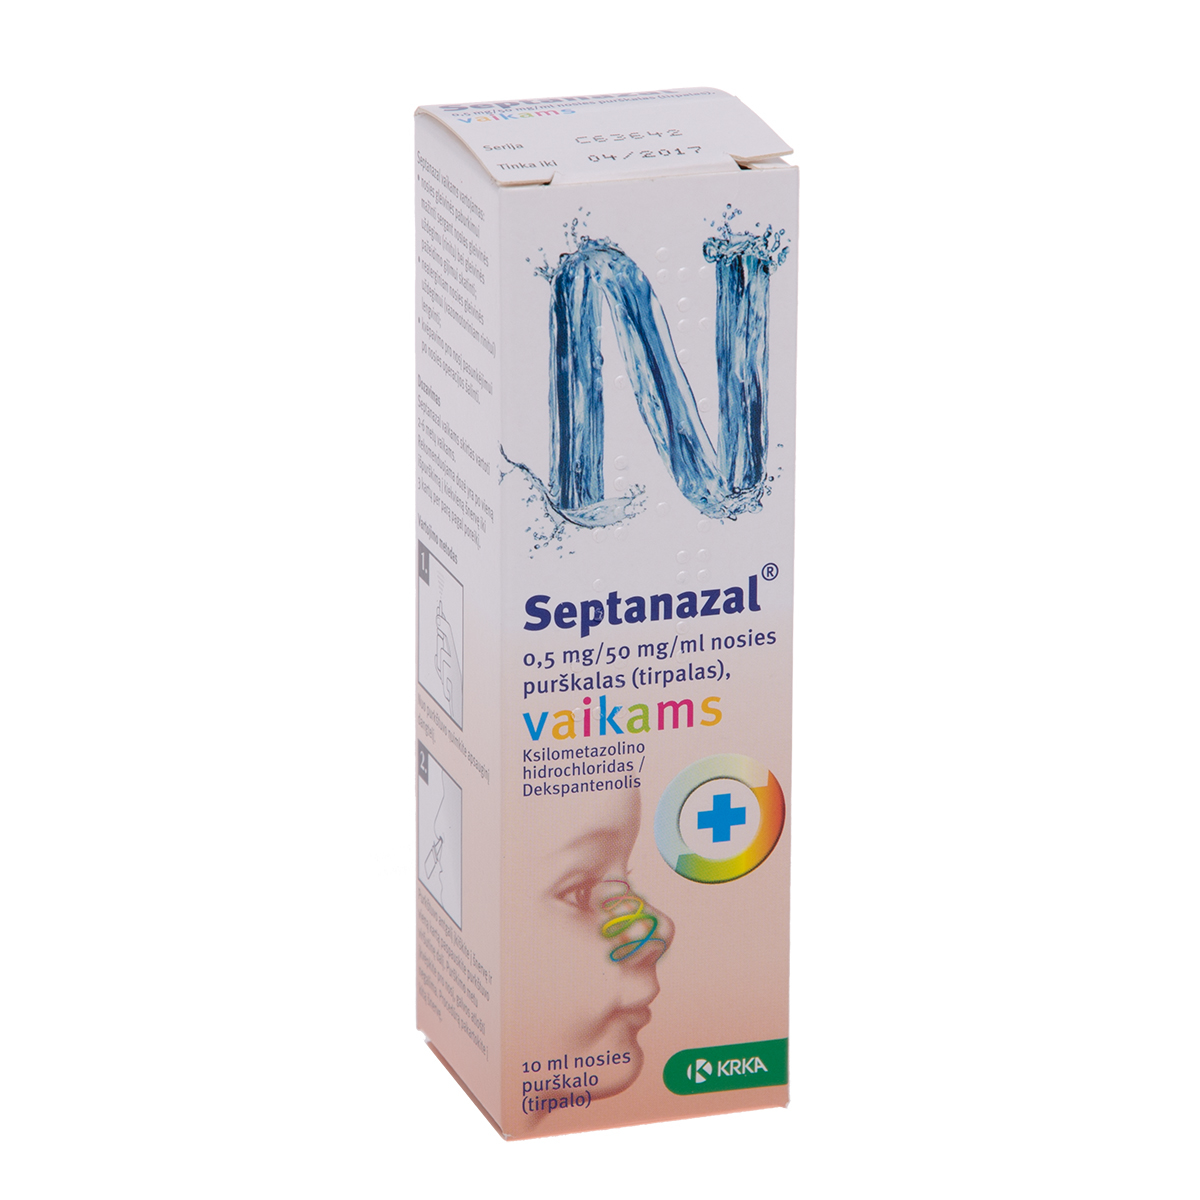 SEPTANAZAL, 0,5 mg/50 mg/ml, nosies purškalas (tirpalas), vaikams, 10 ml